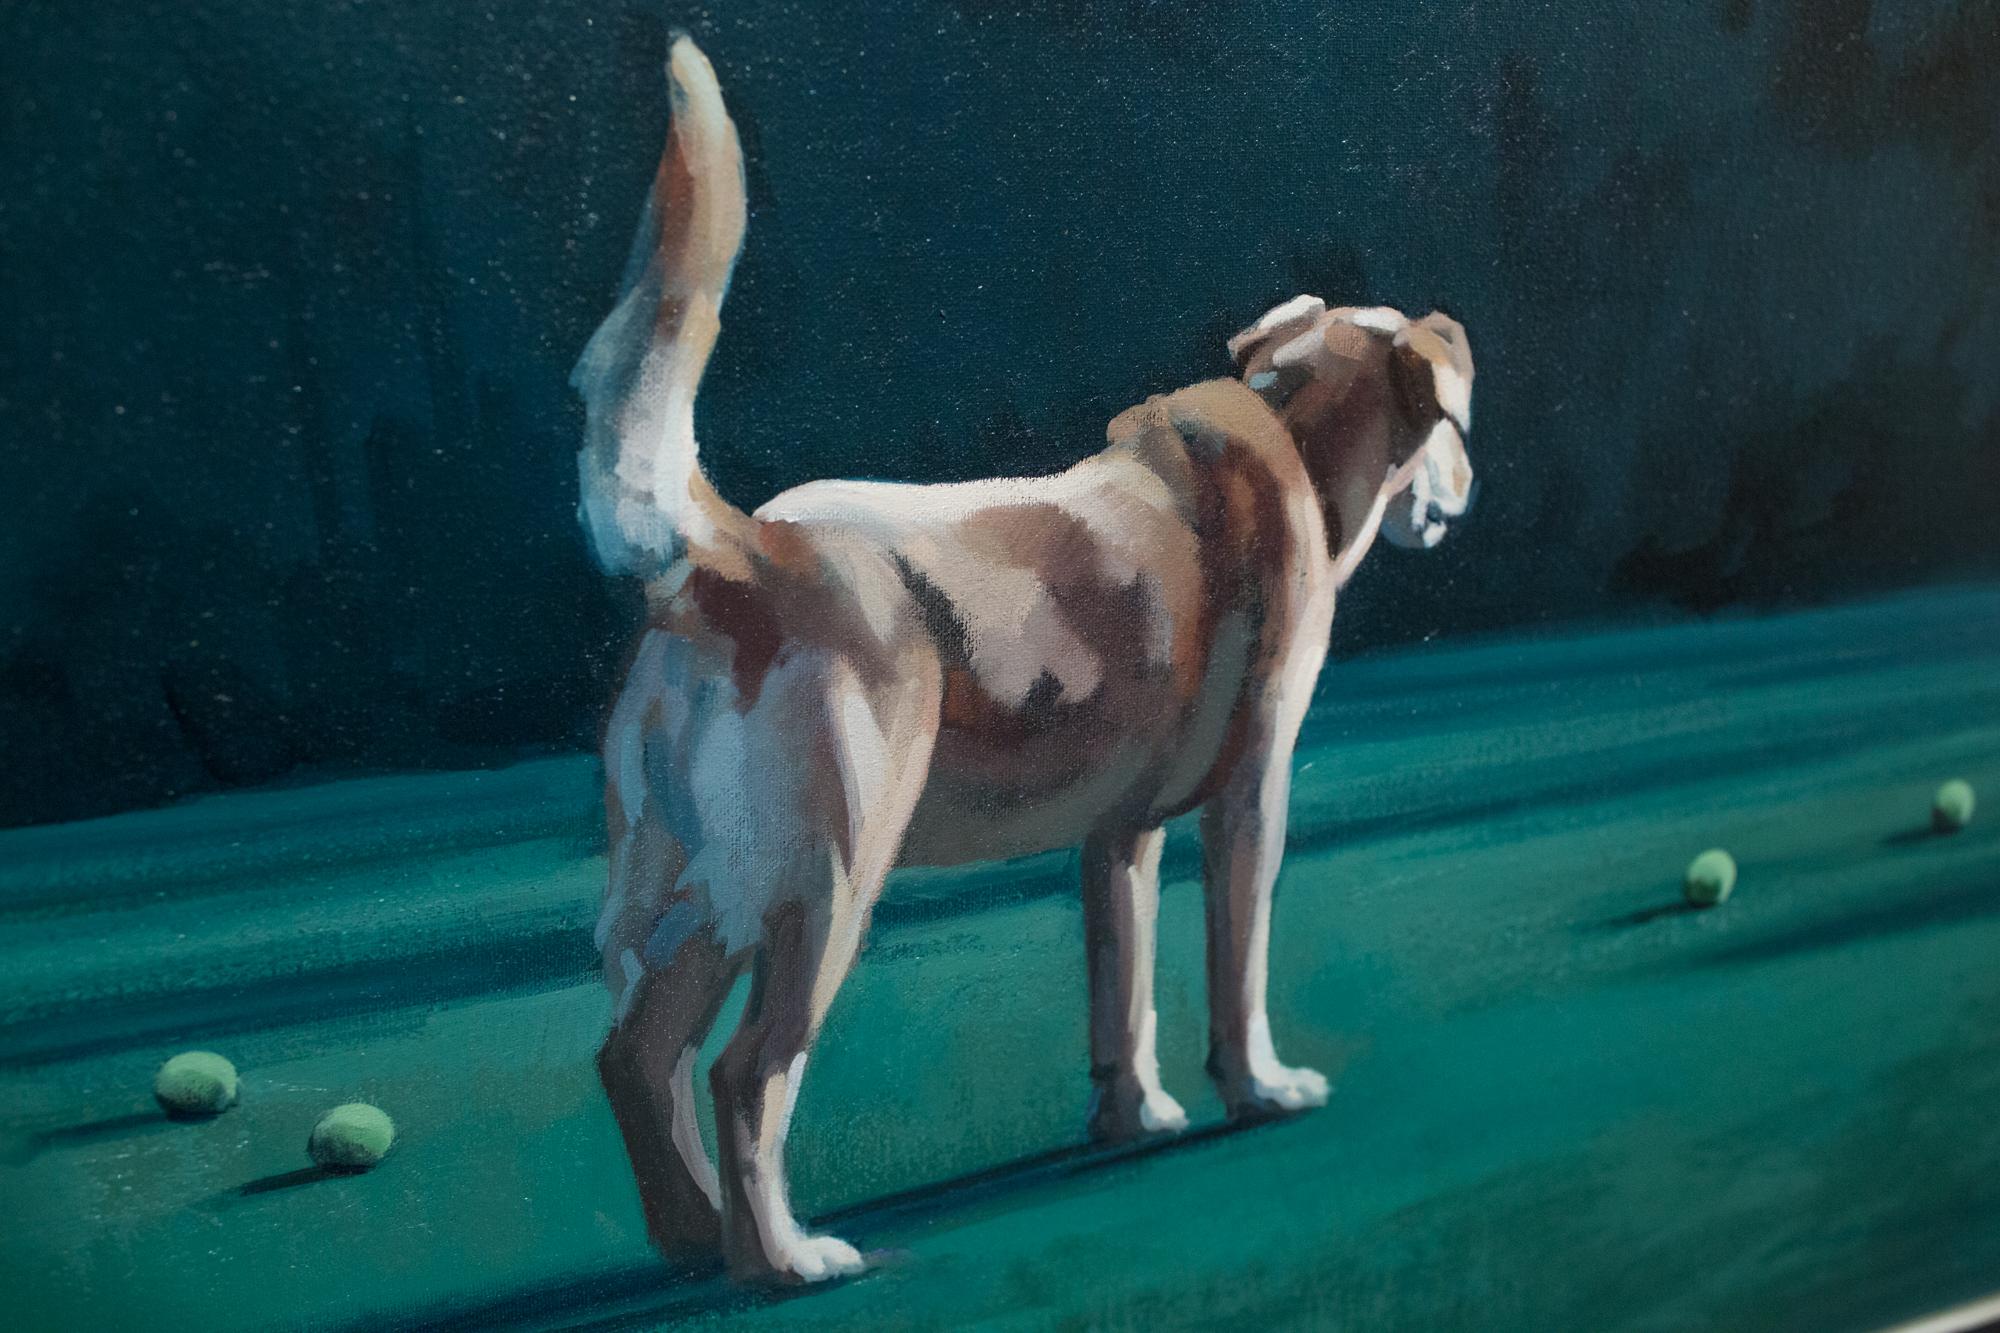 dog looking at tennis ball painting